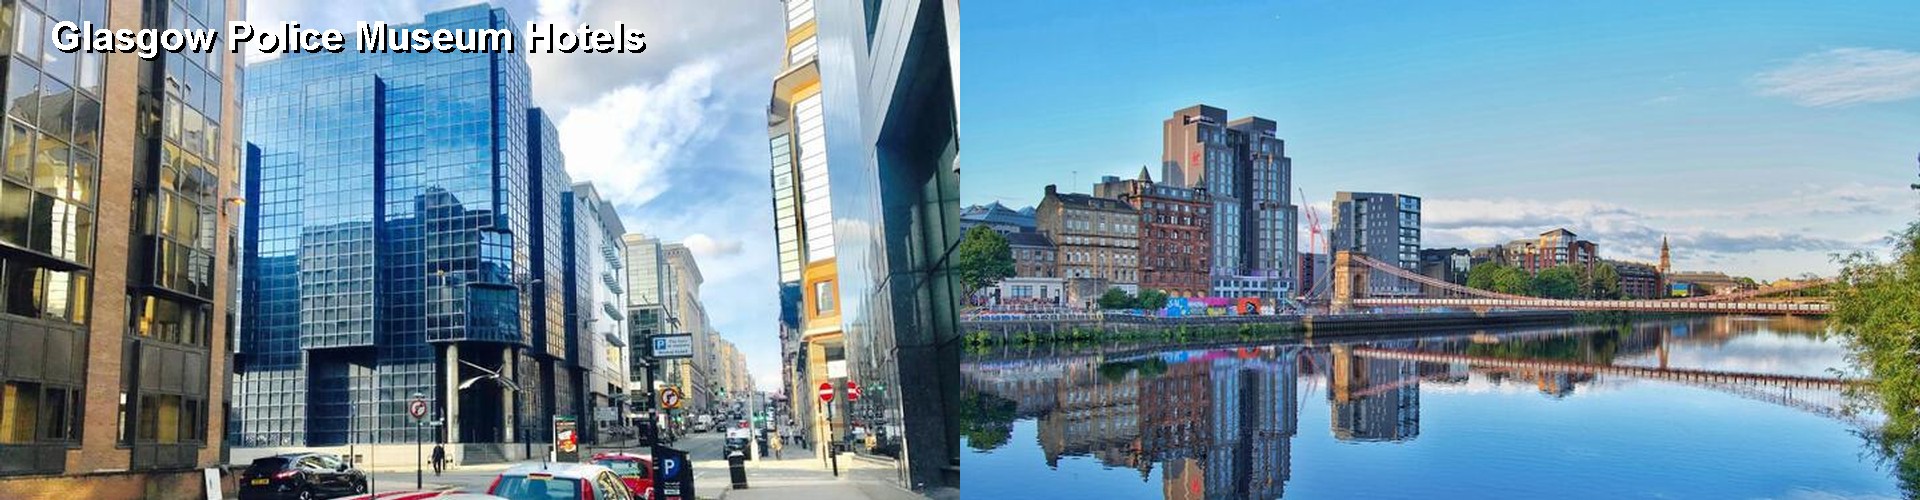 5 Best Hotels near Glasgow Police Museum